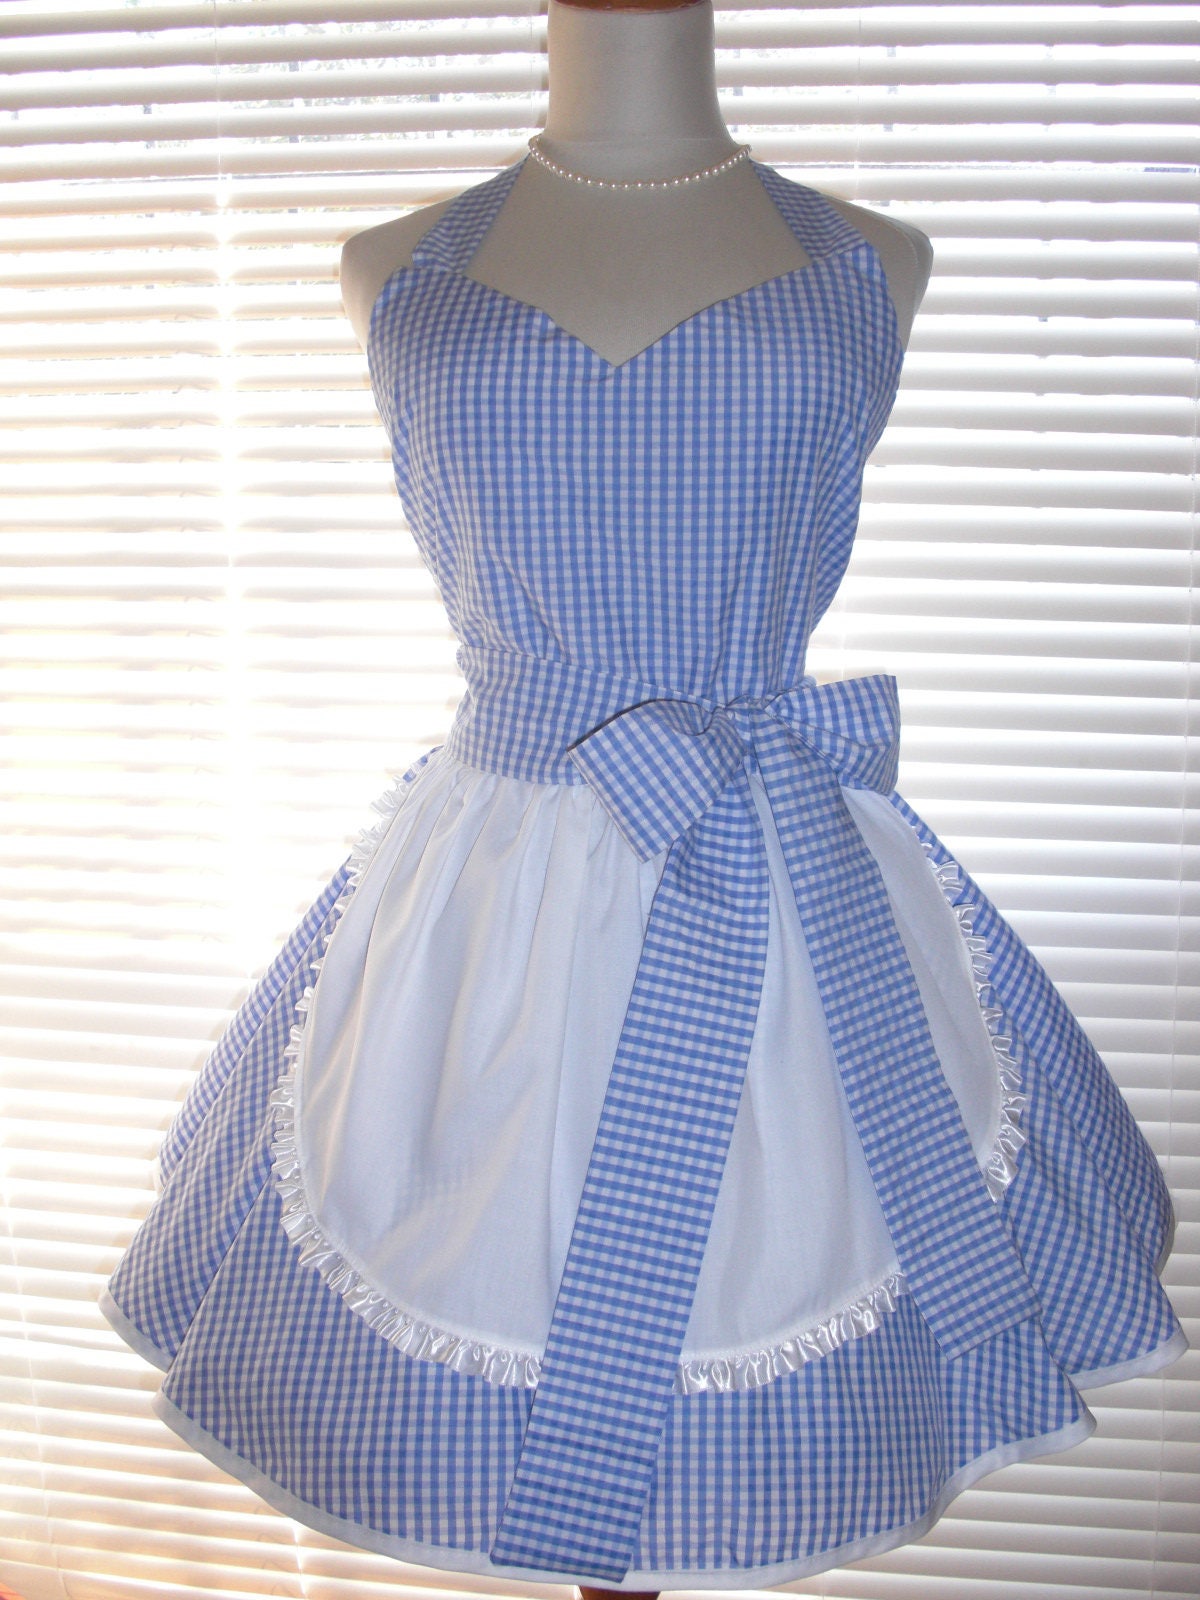 Retro Costume Apron French Maid Apron Blue and White Gingham | Etsy